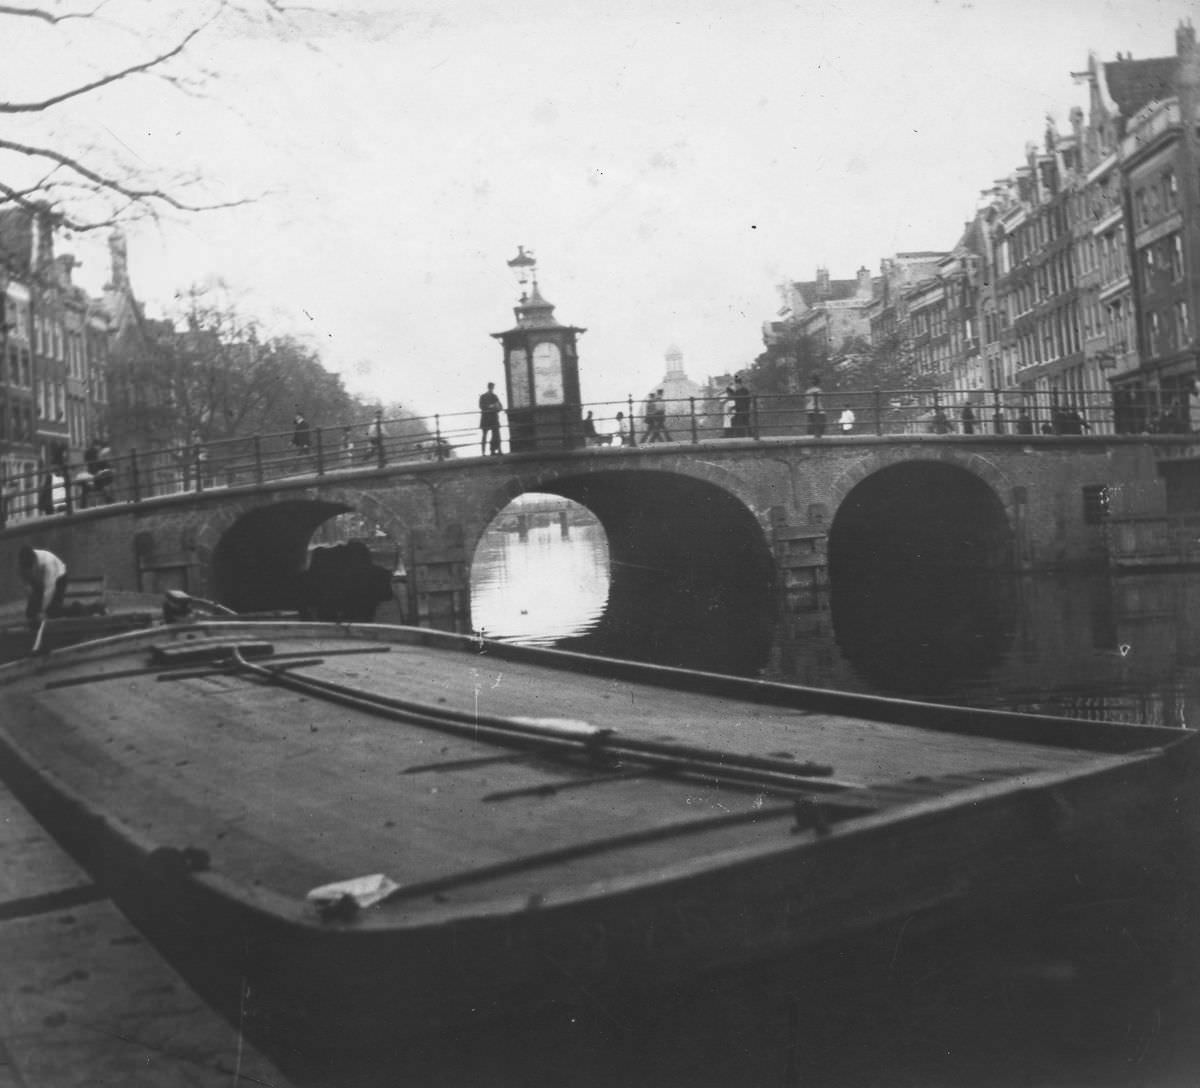 View of the Torensluis Bridge over the Singel Canal.